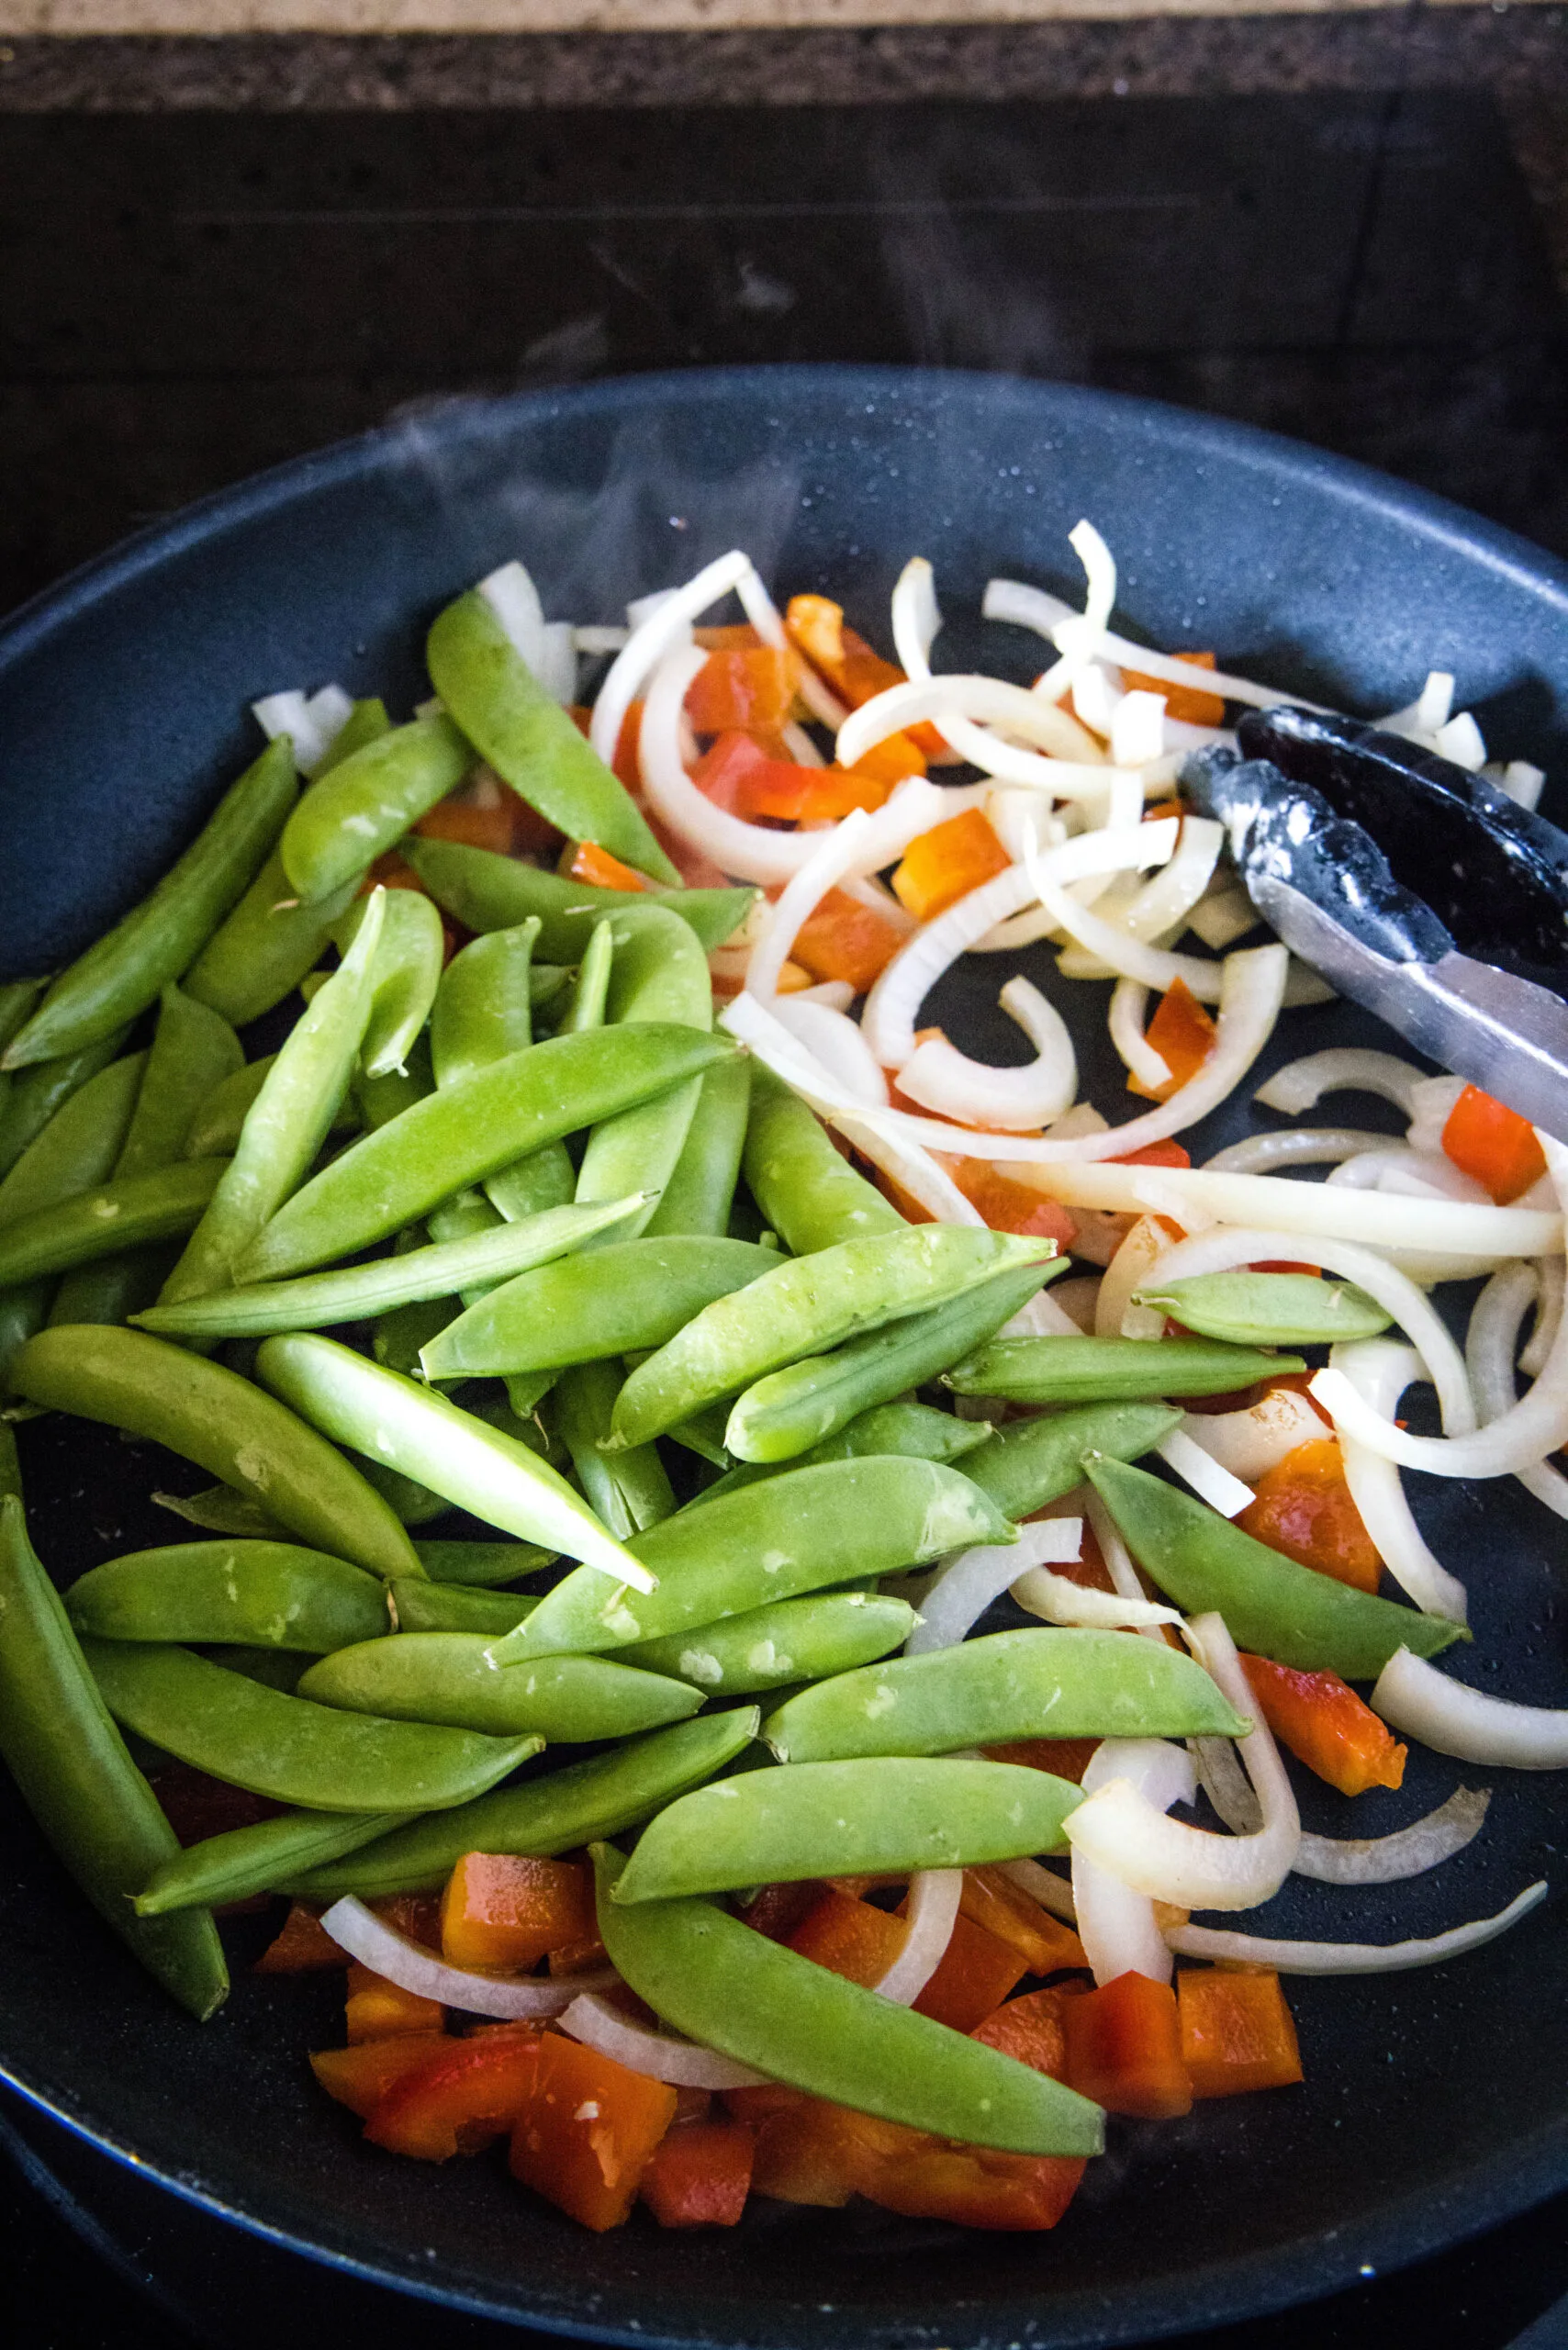 stir fry veggies in a pan